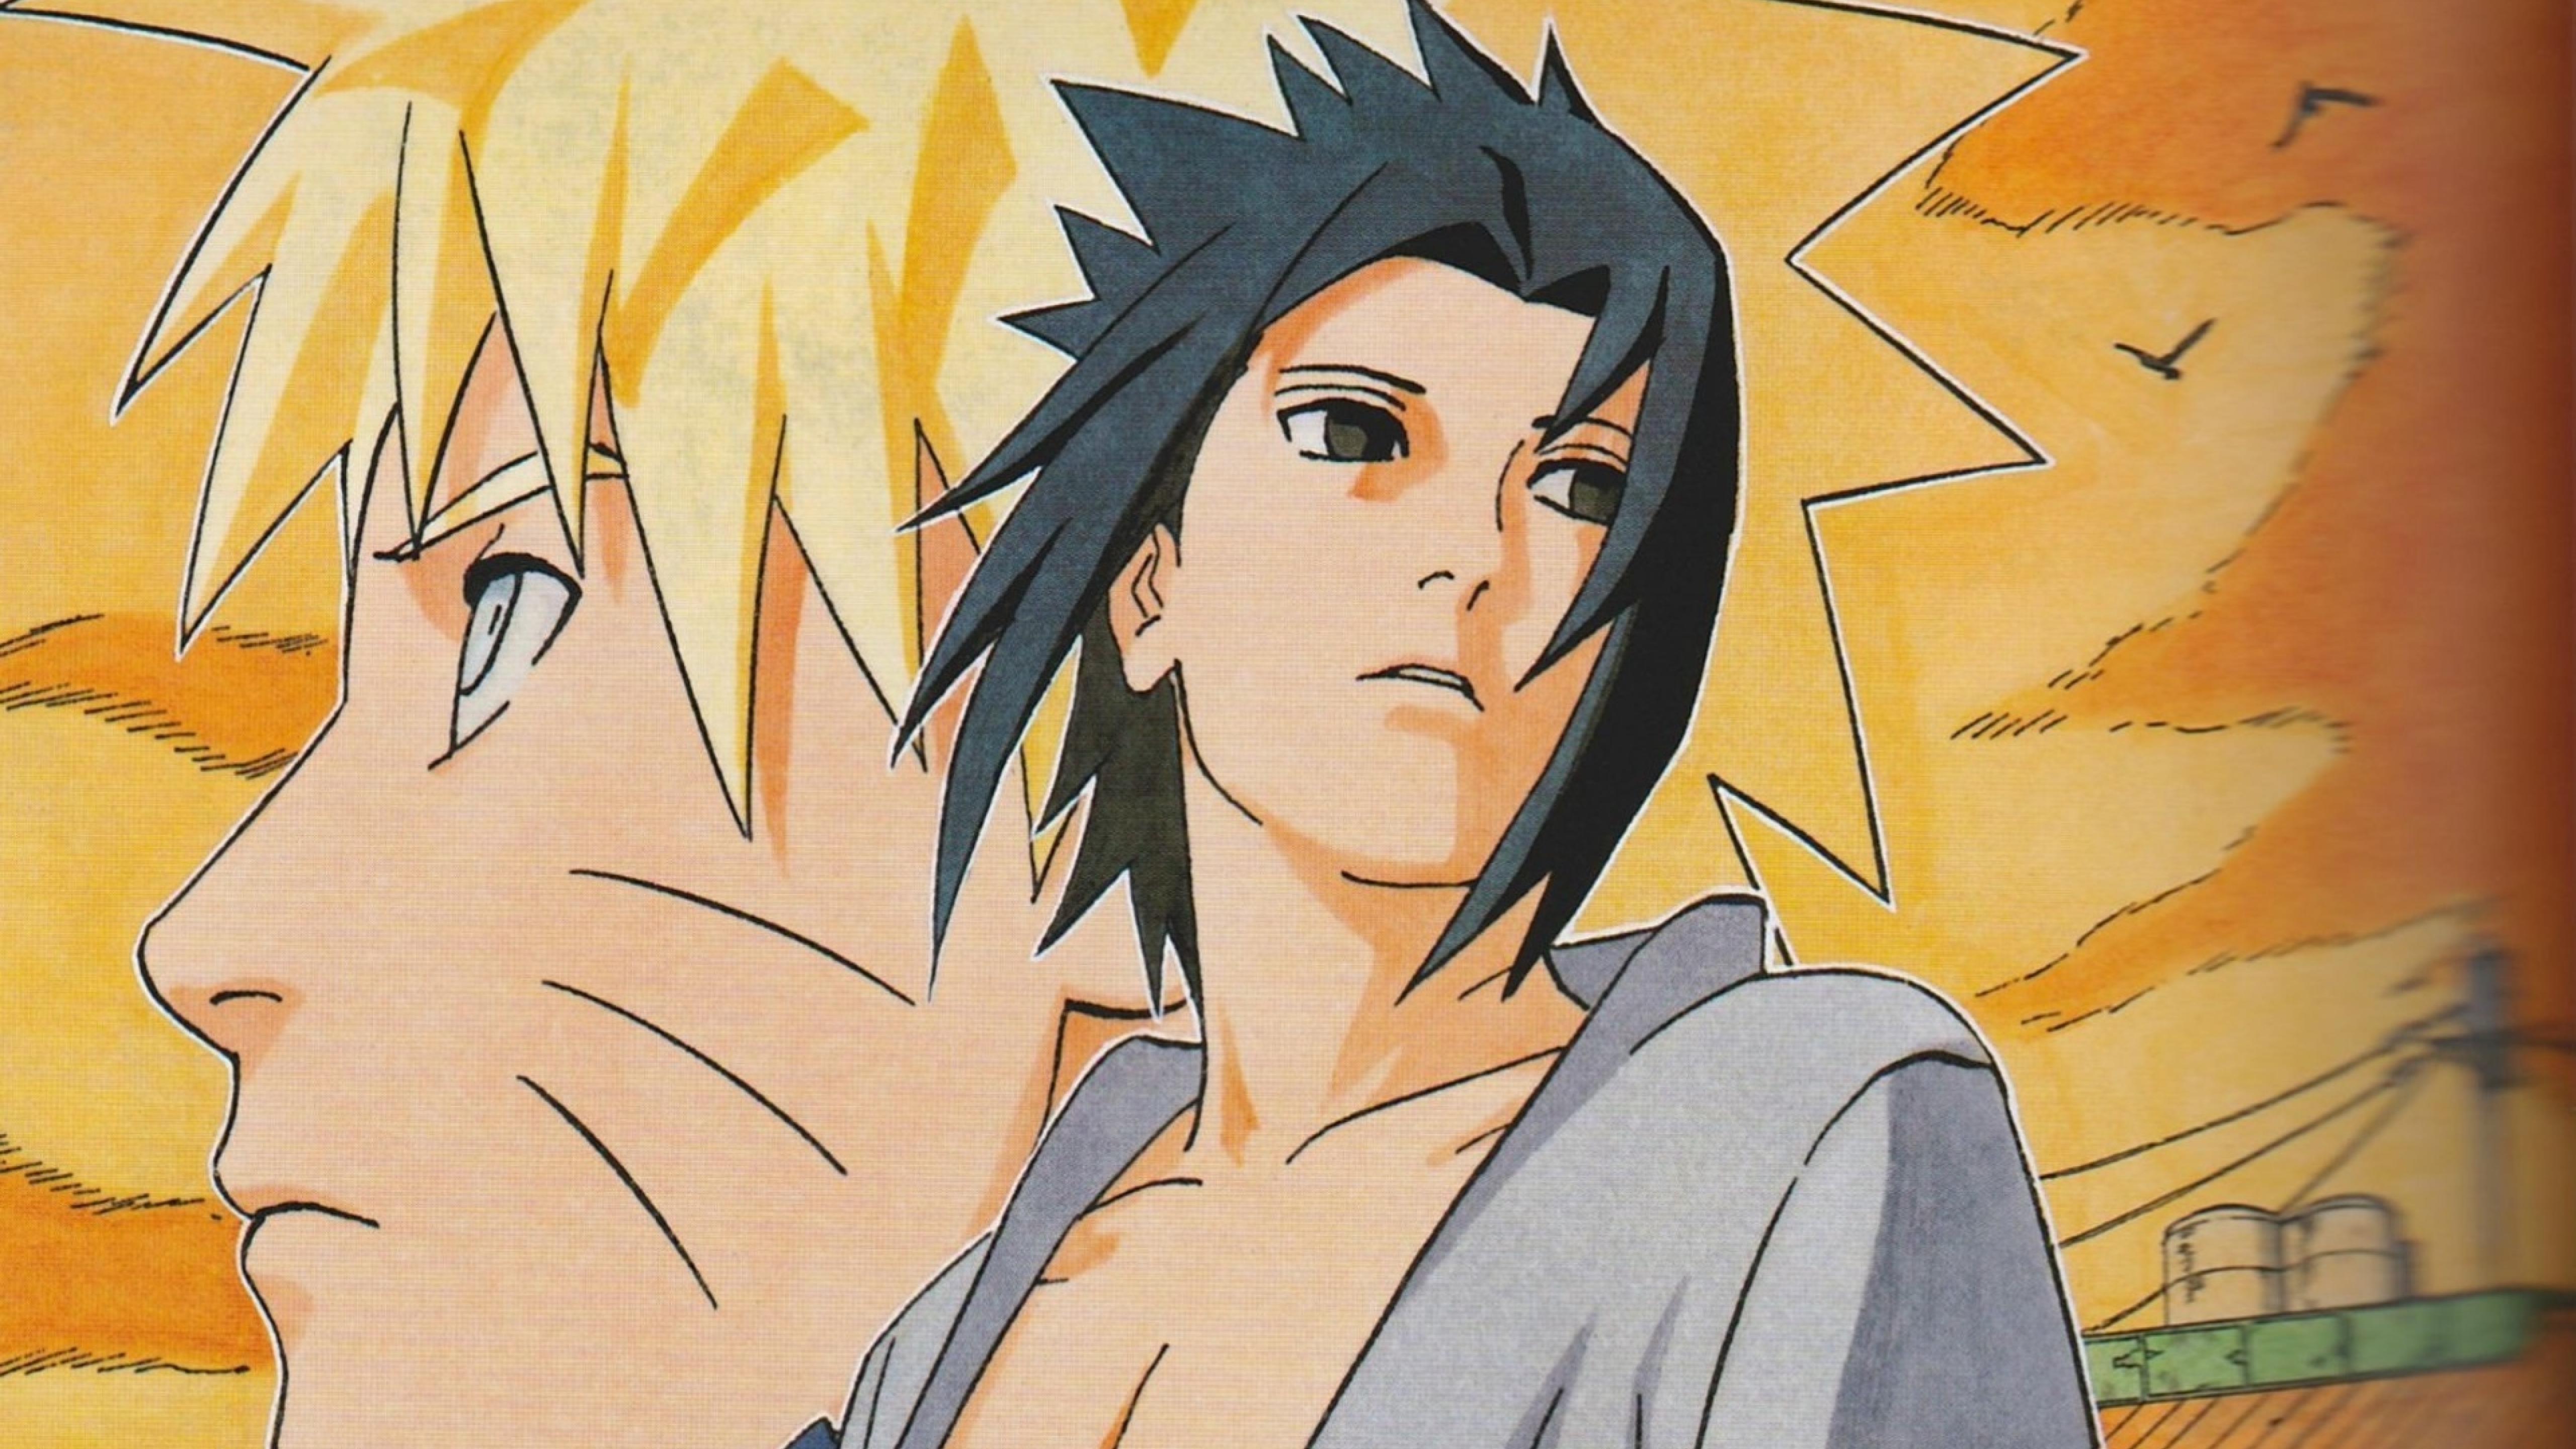 5120x2880 Naruto Uzumaki and Sasuke Uchiha 5K Wallpaper, HD Anime 4K  Wallpapers, Images, Photos and Background - Wallpapers Den